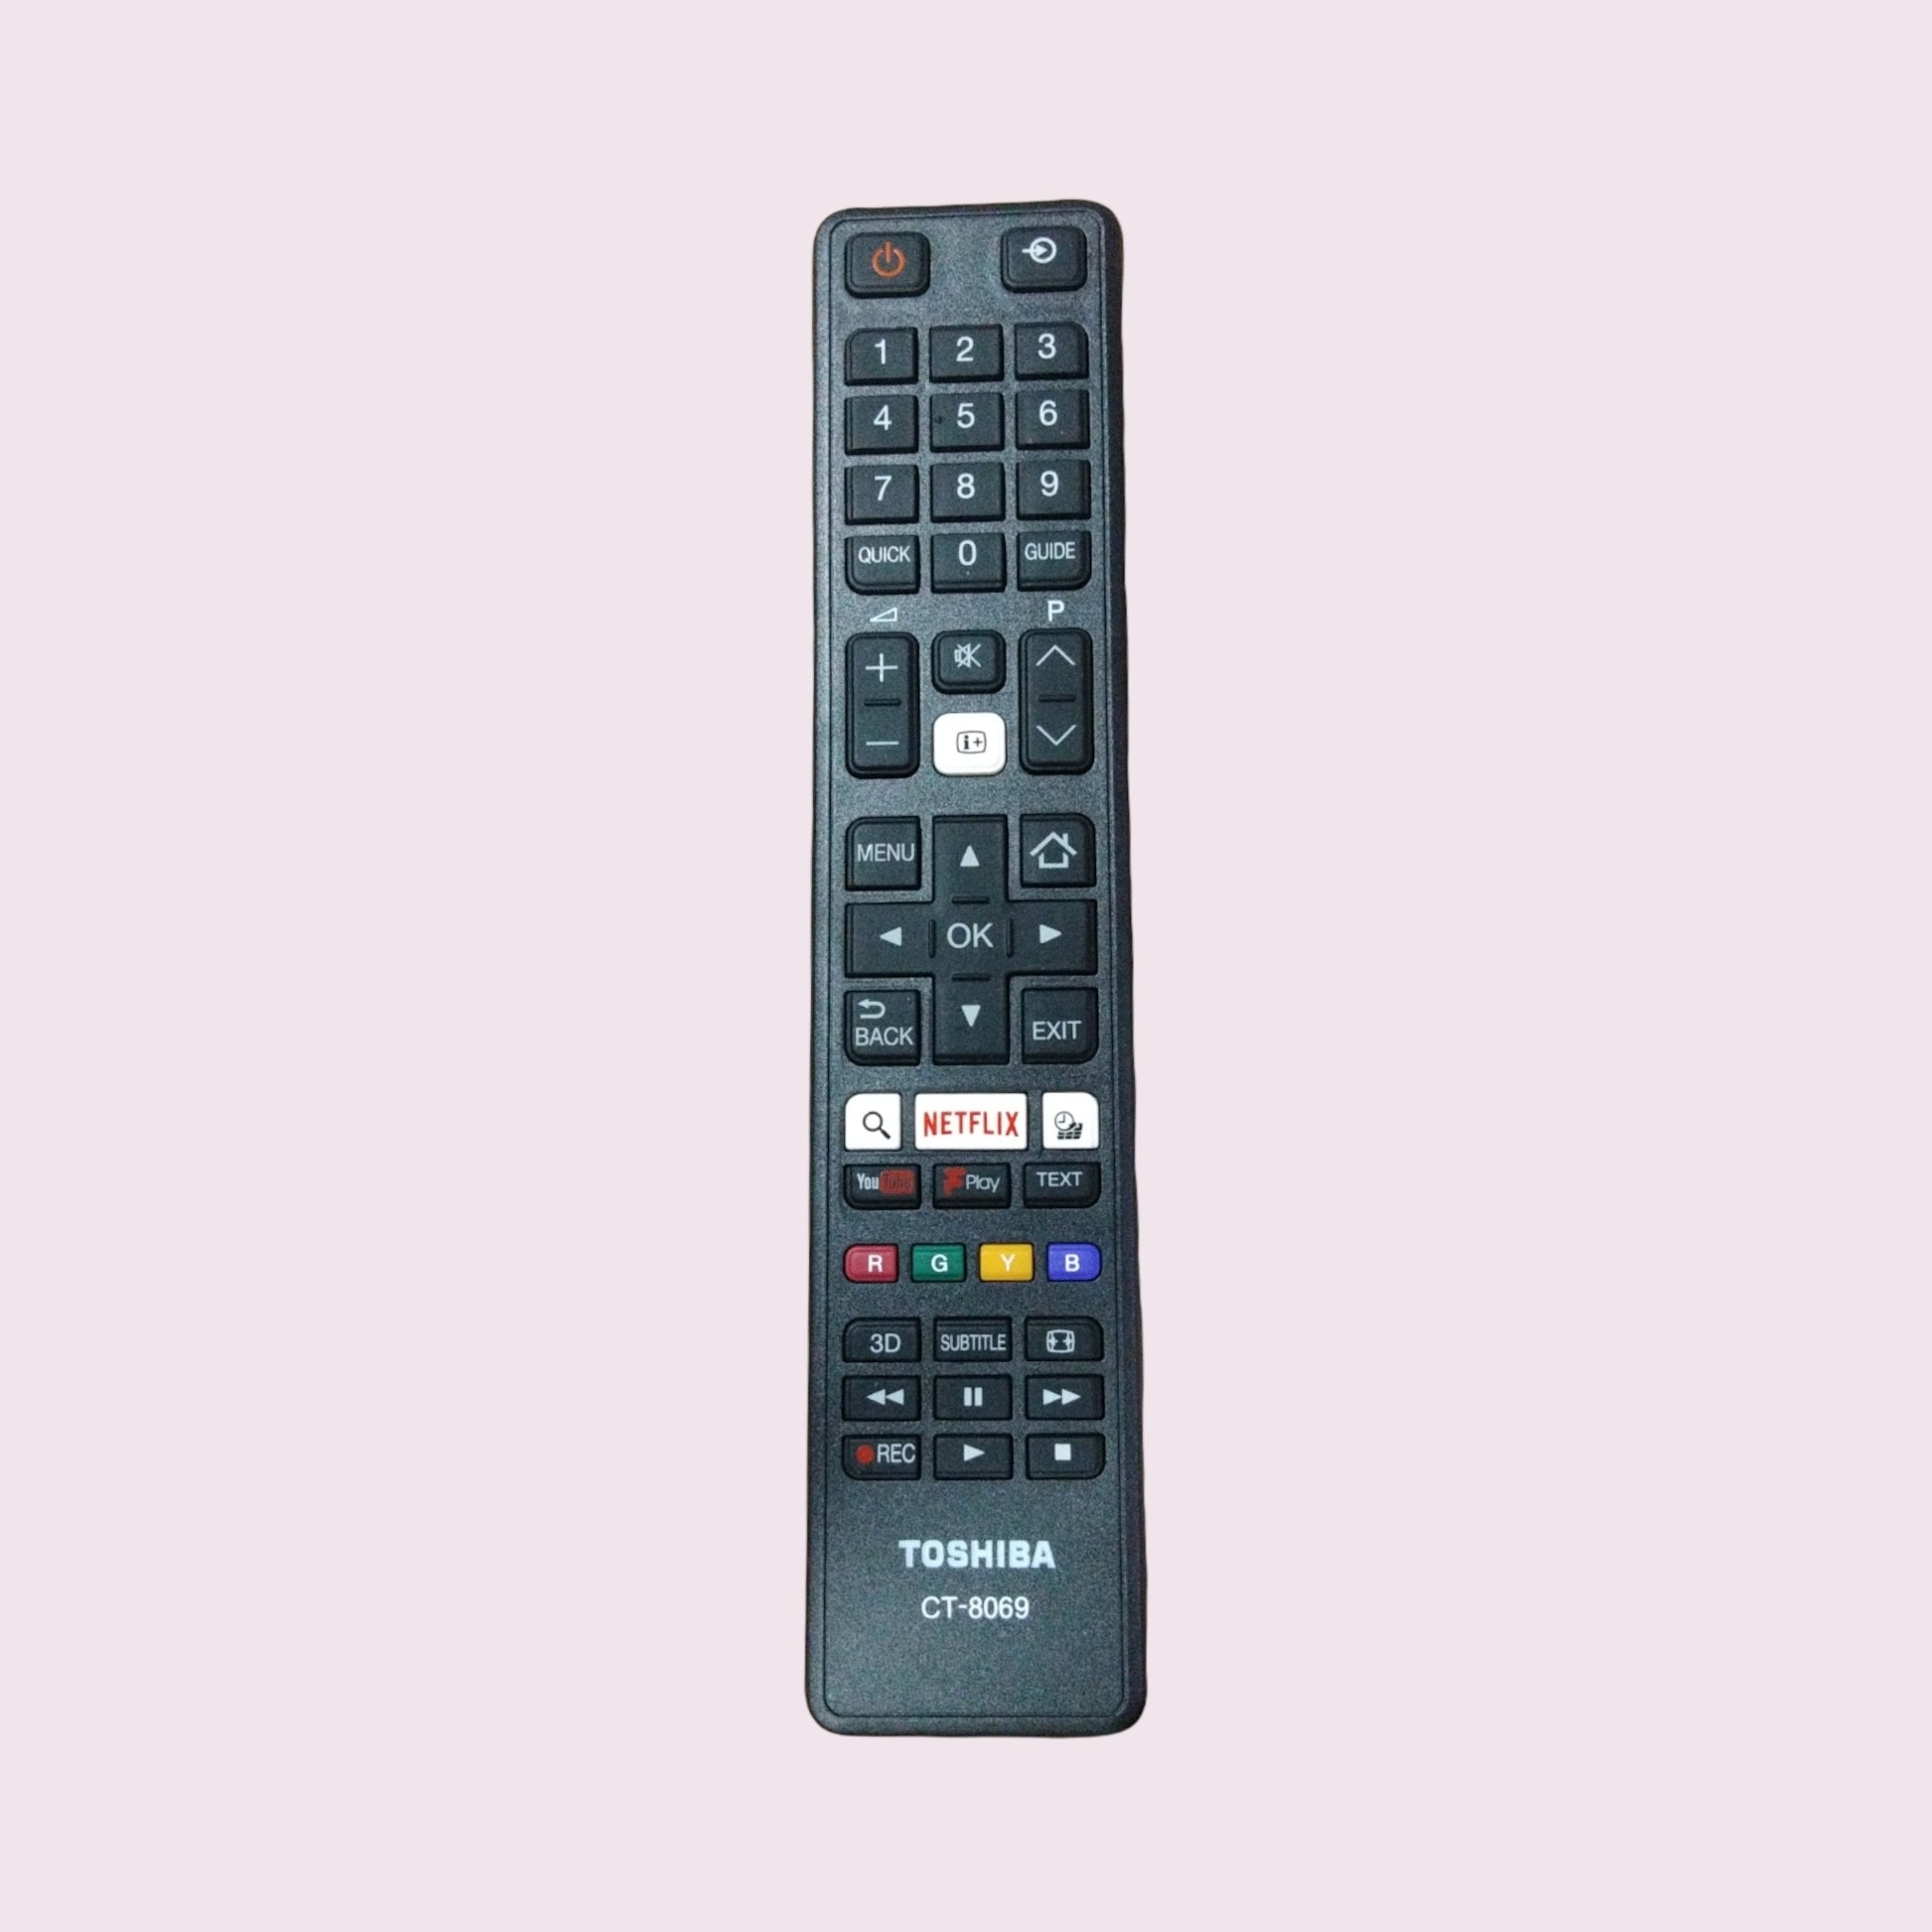 Toshiba Smart led tv remote - Faritha